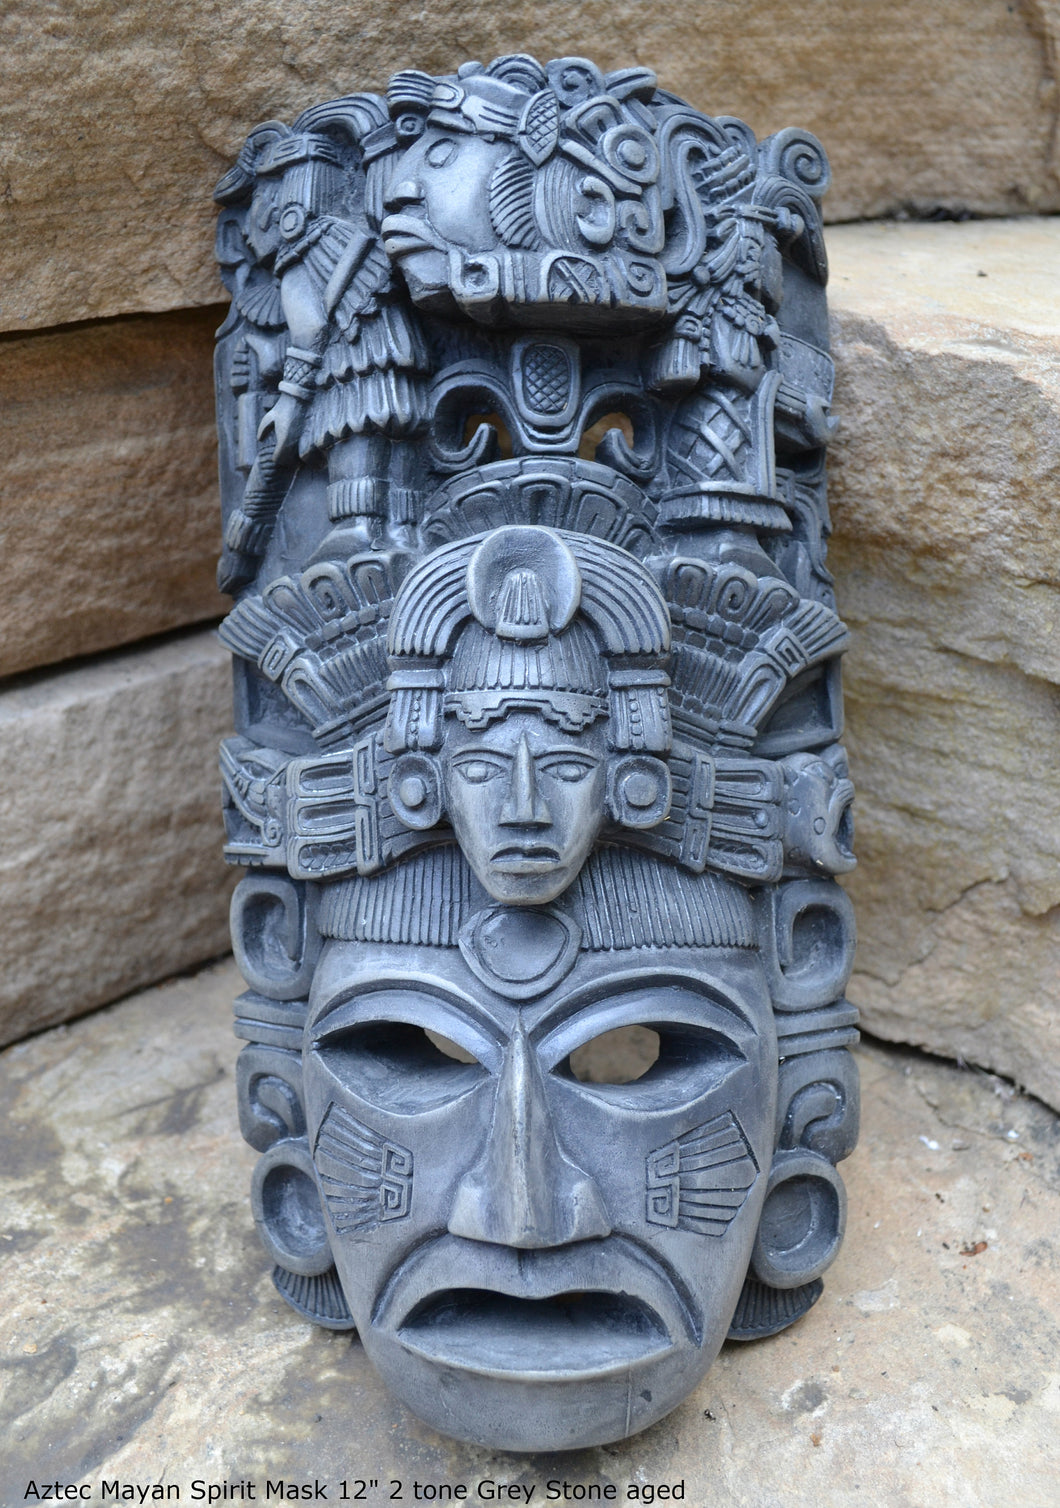 History Aztec Maya Spirit Artifact Carved Mask Sculpture Statue 12" Tall www.Neo-Mfg.com Plaque wall art